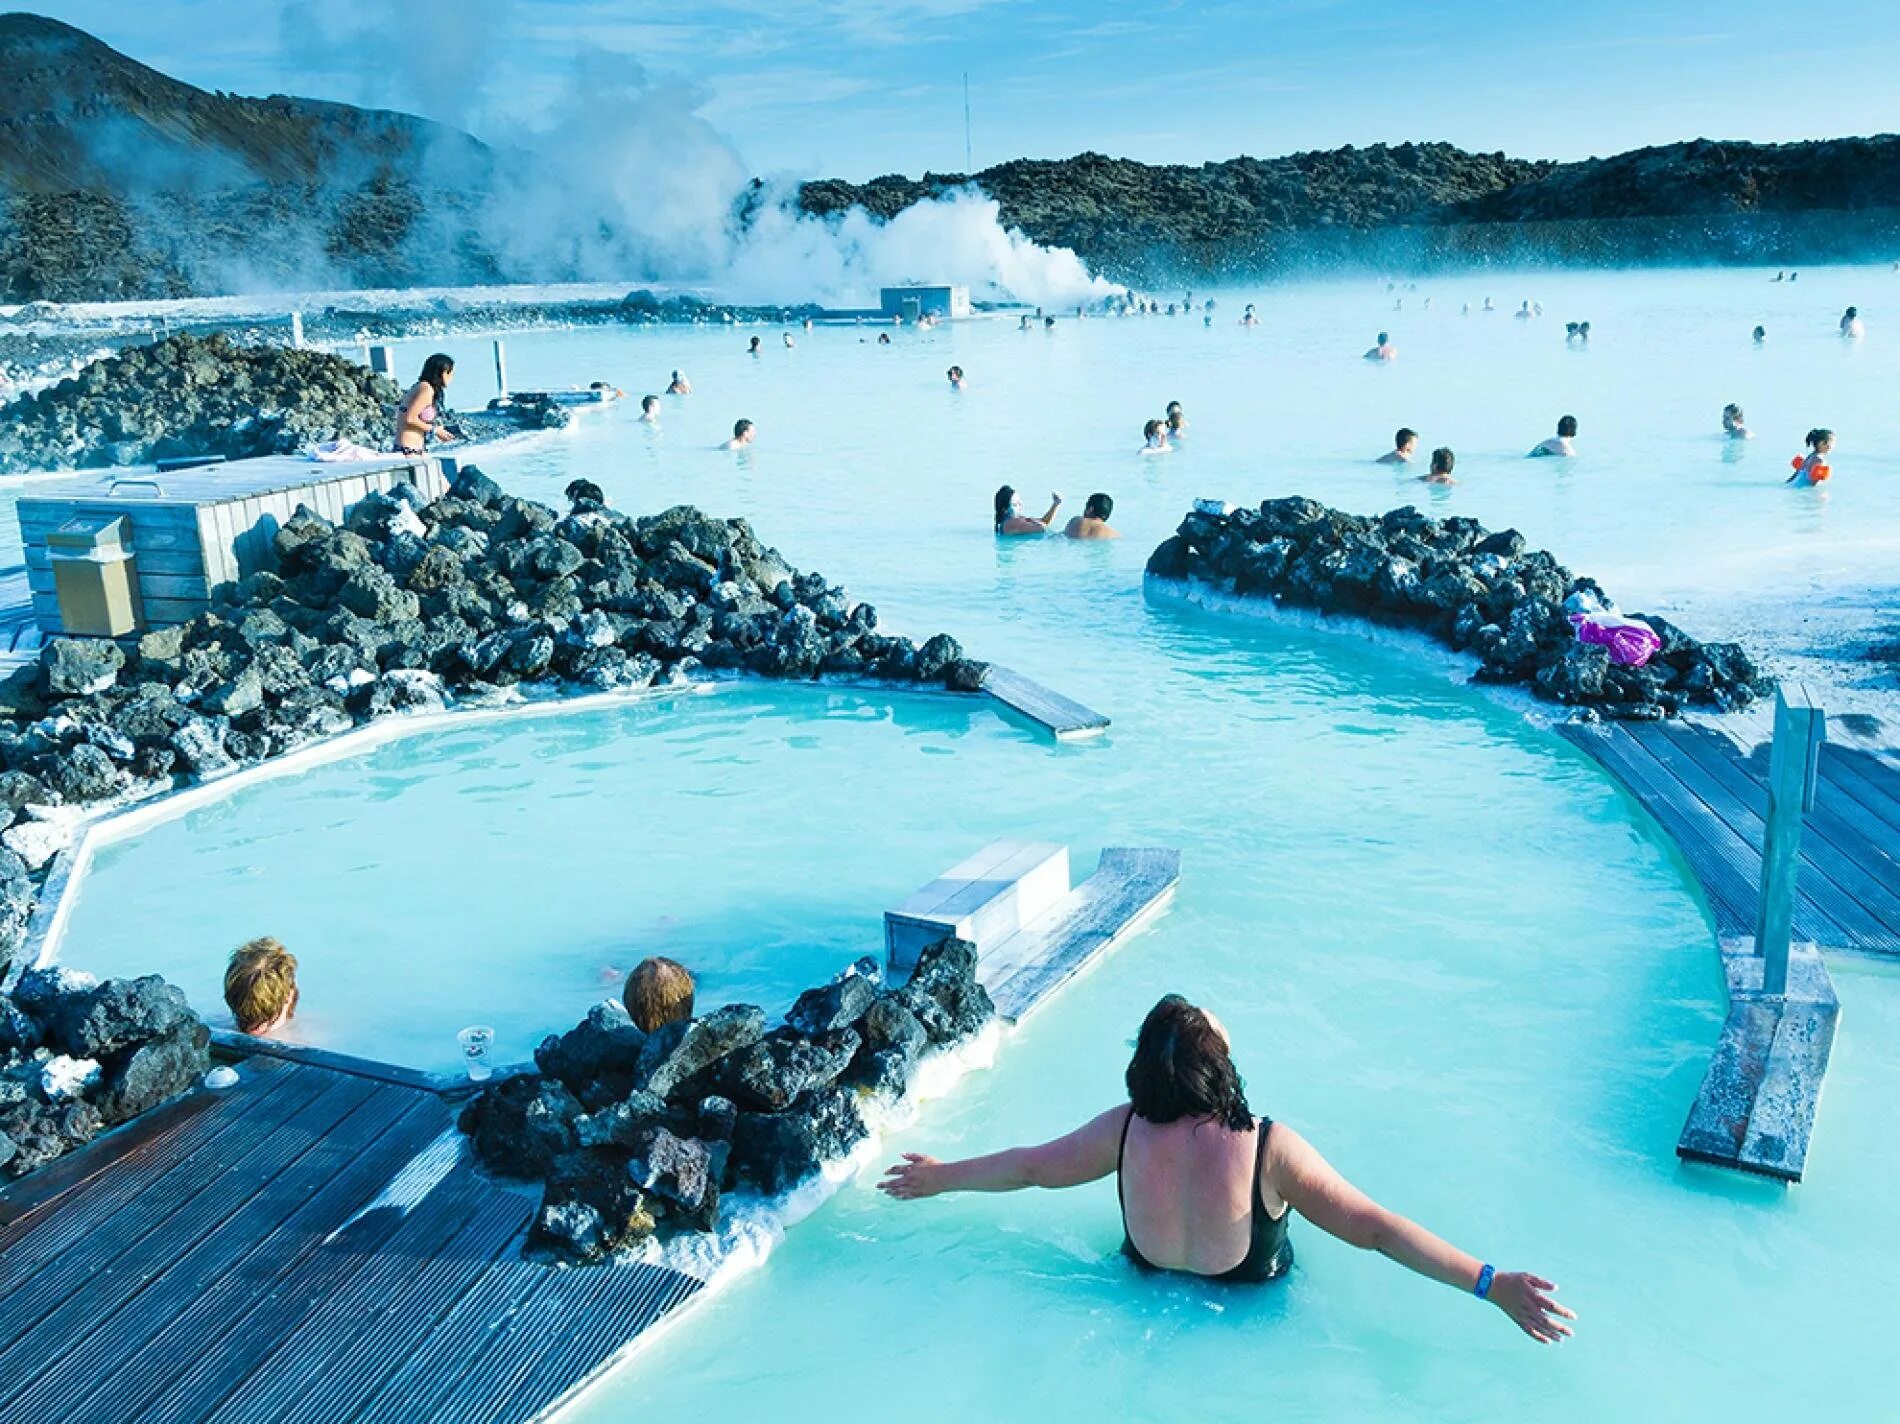 Голубая лагуна 4. Голубая Лагуна Исландия. Исландия Рейкьявик голубая Лагуна. Исландия озеро голубая Лагуна. Голубая Лагуна Исландия спа комплекс.